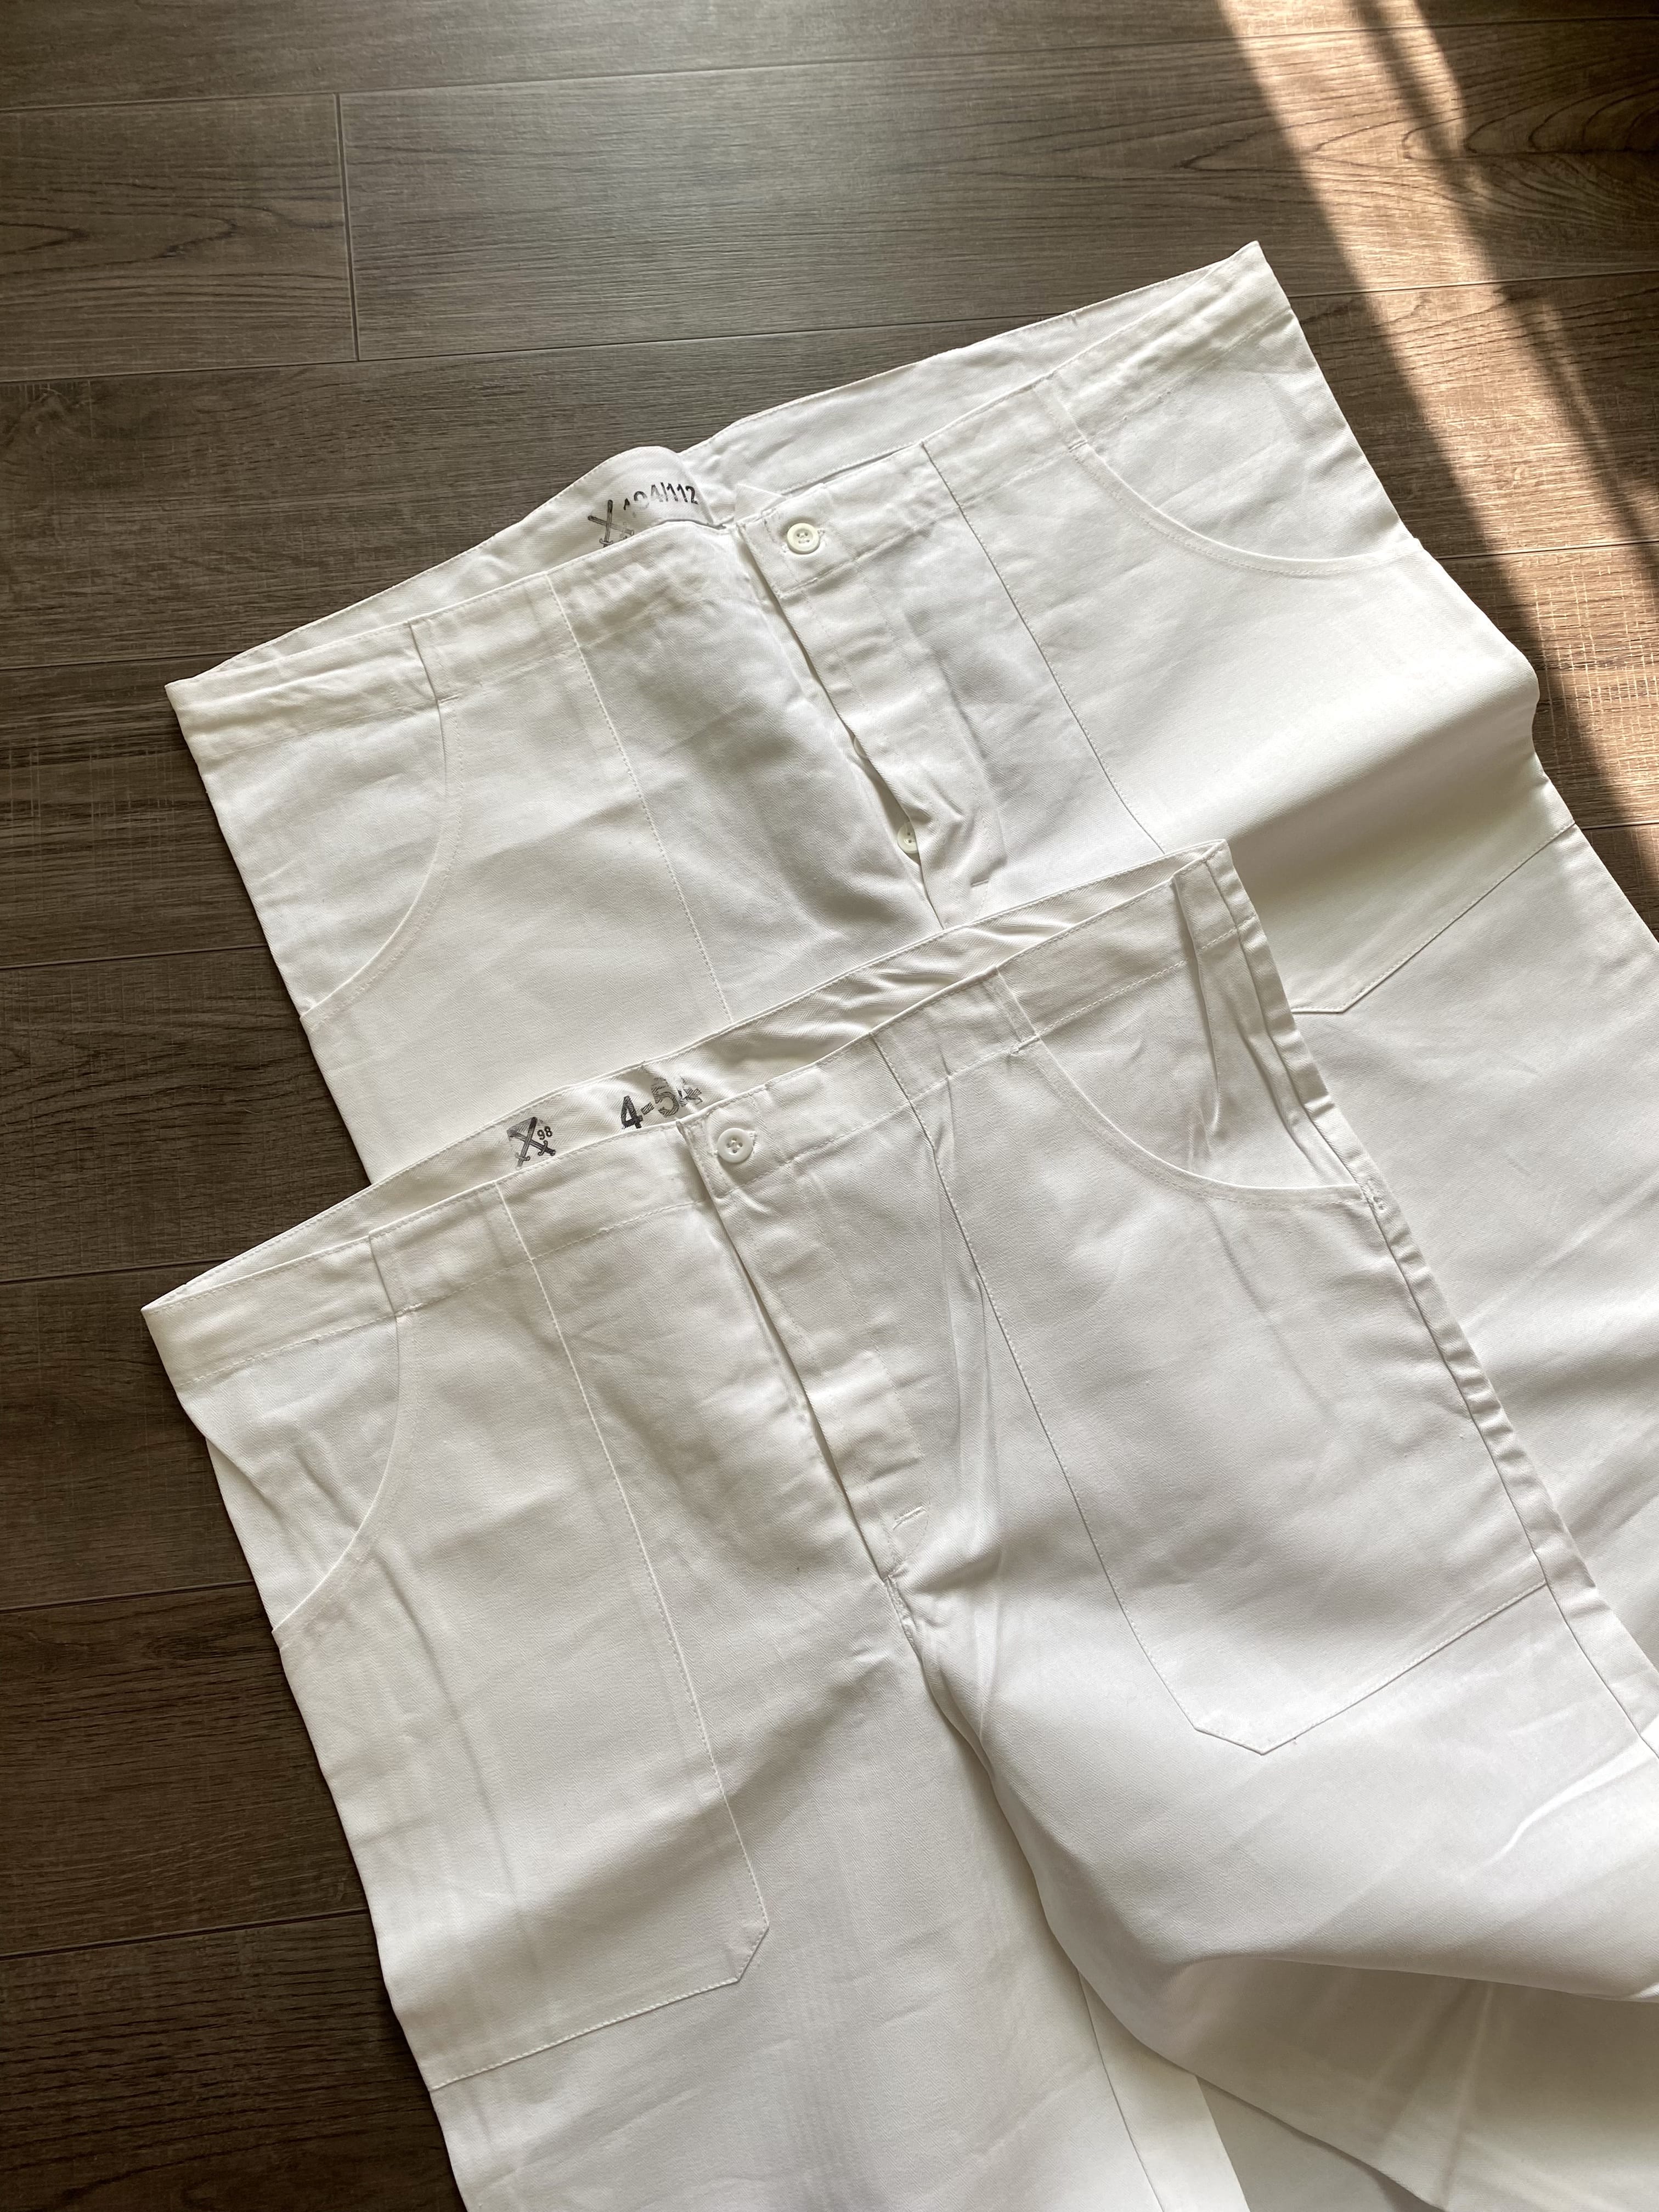 NOS Old Czech Army HBT White String Pants 32/34 Size - 체리피커